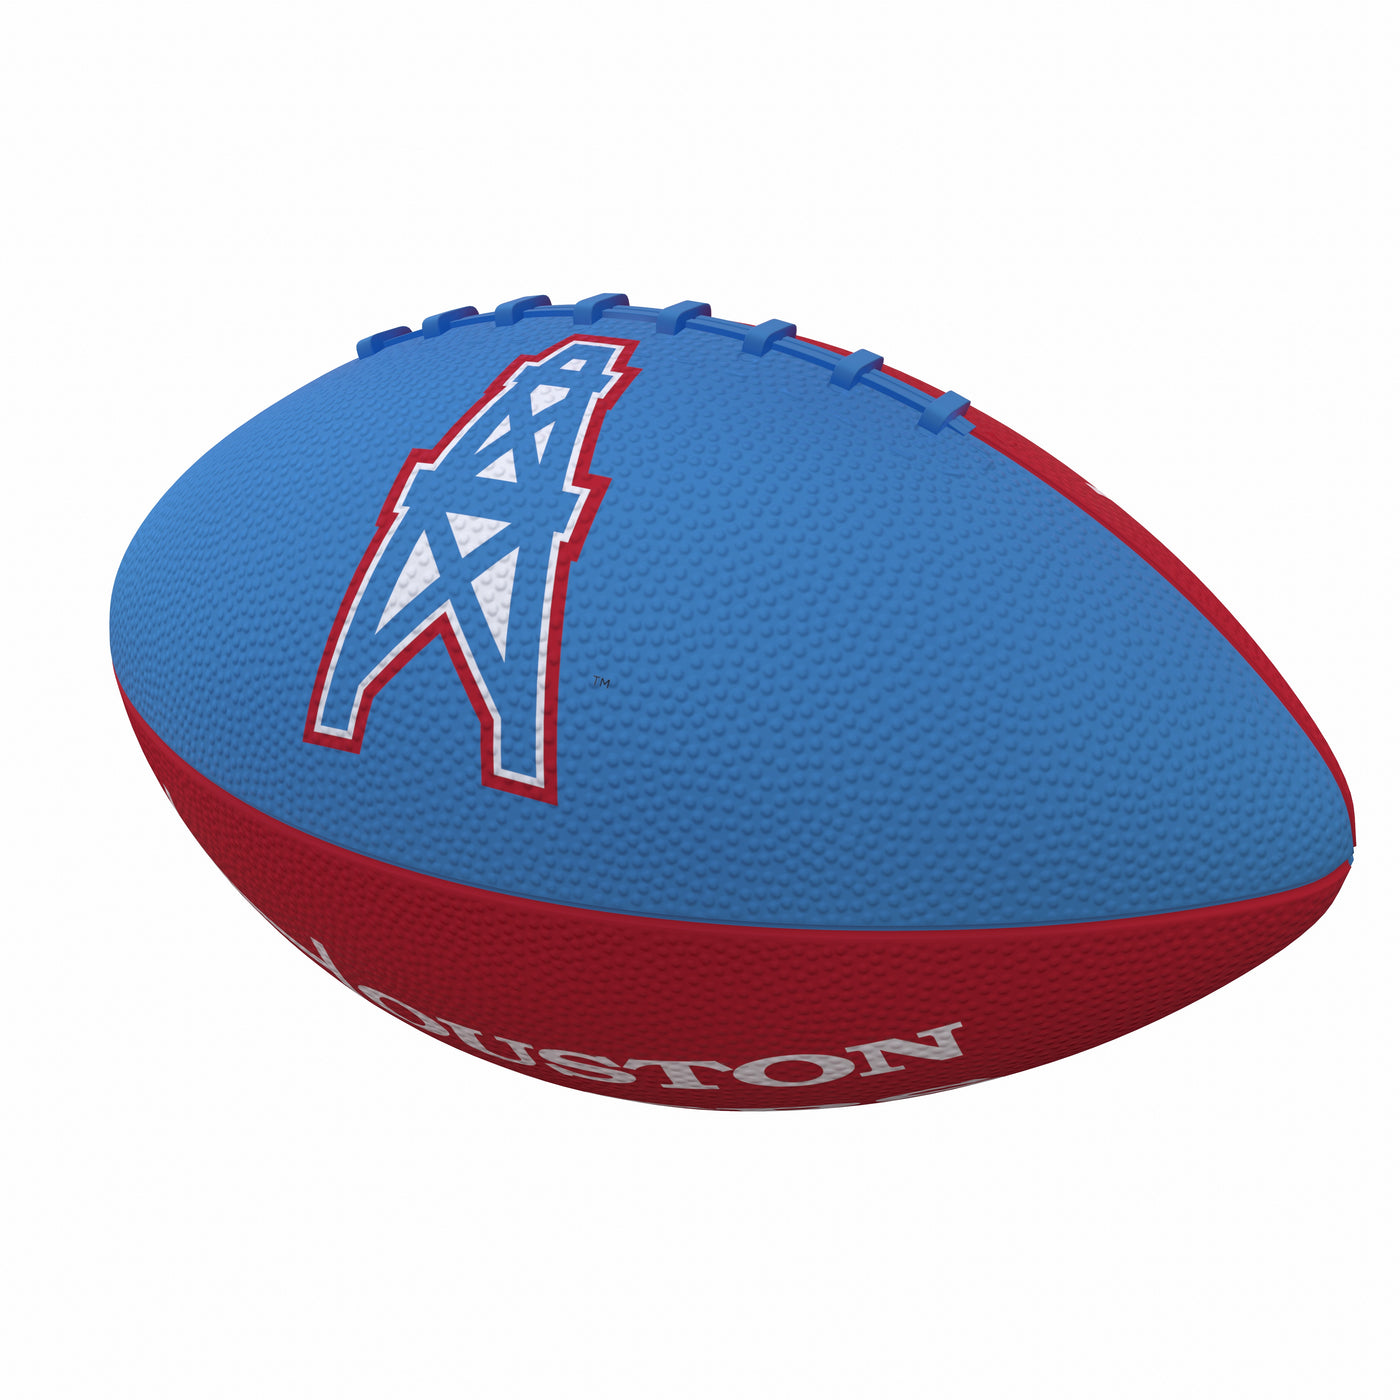 Houston Oilers Pinwheel Junior Size Rubber Football